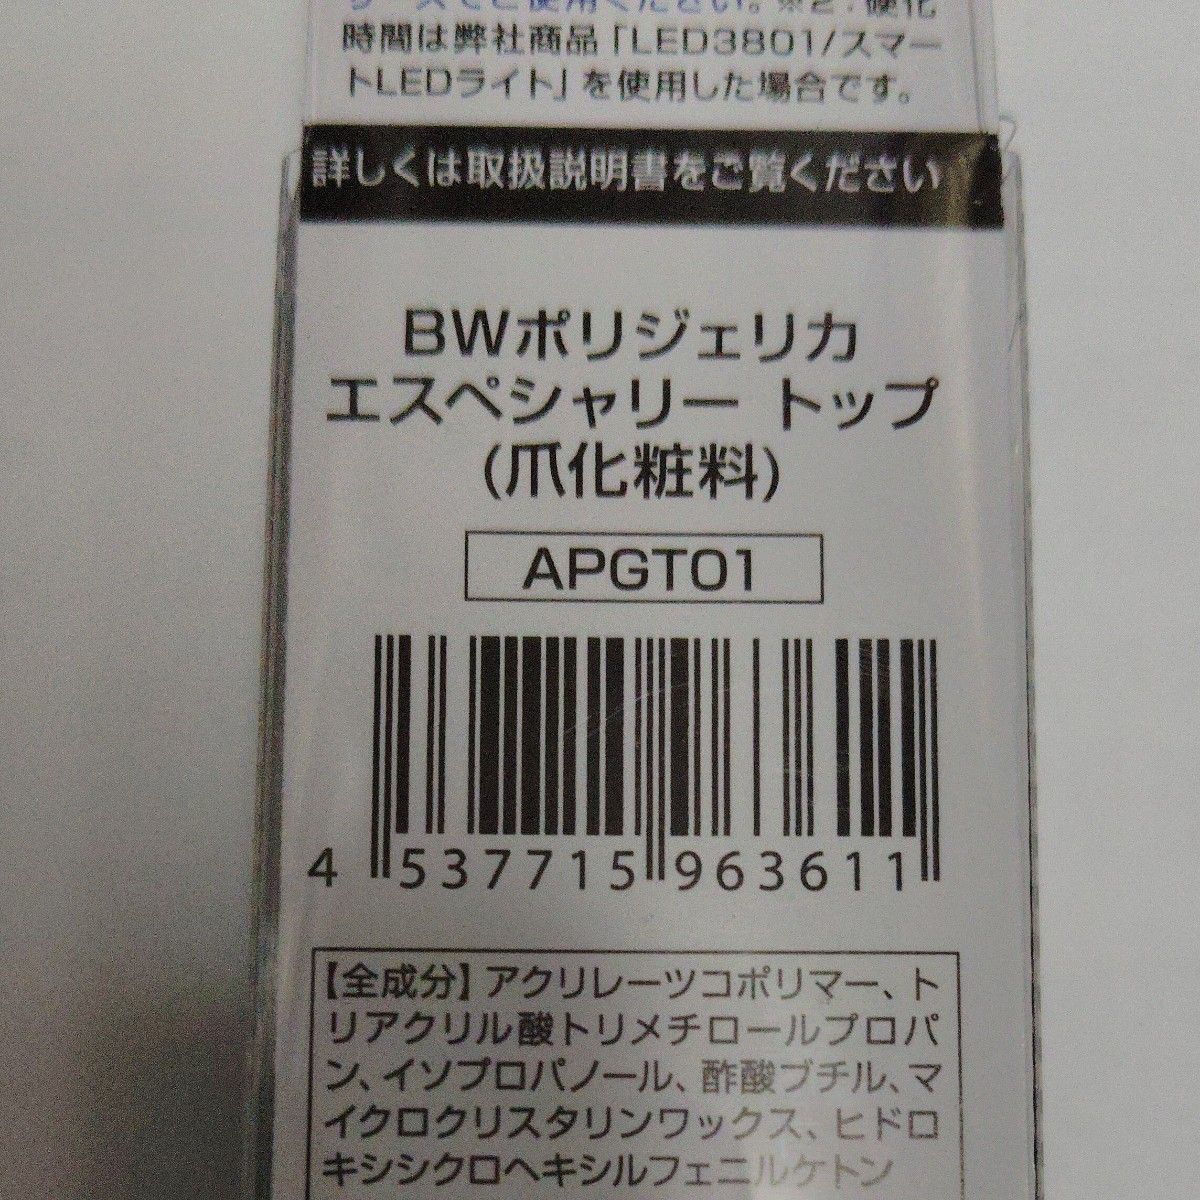 BW ポリジェリカ エスペシャリー トップ APGT01 6g